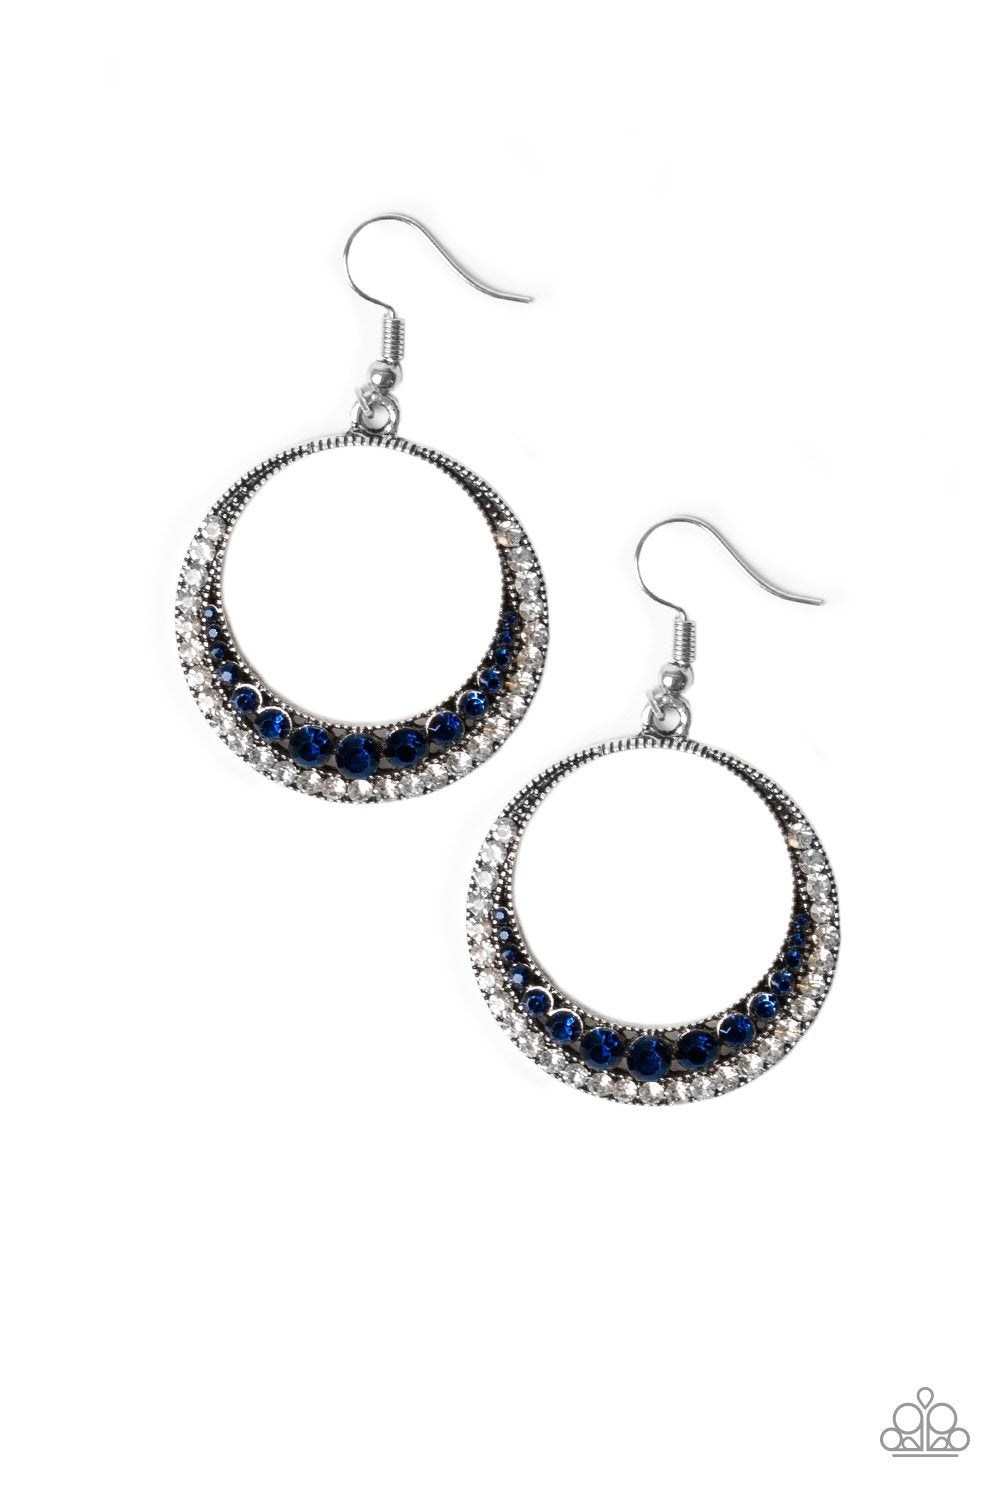 Demanding Dazzle Blue Rhinestone Earrings - Paparazzi Accessories-CarasShop.com - $5 Jewelry by Cara Jewels